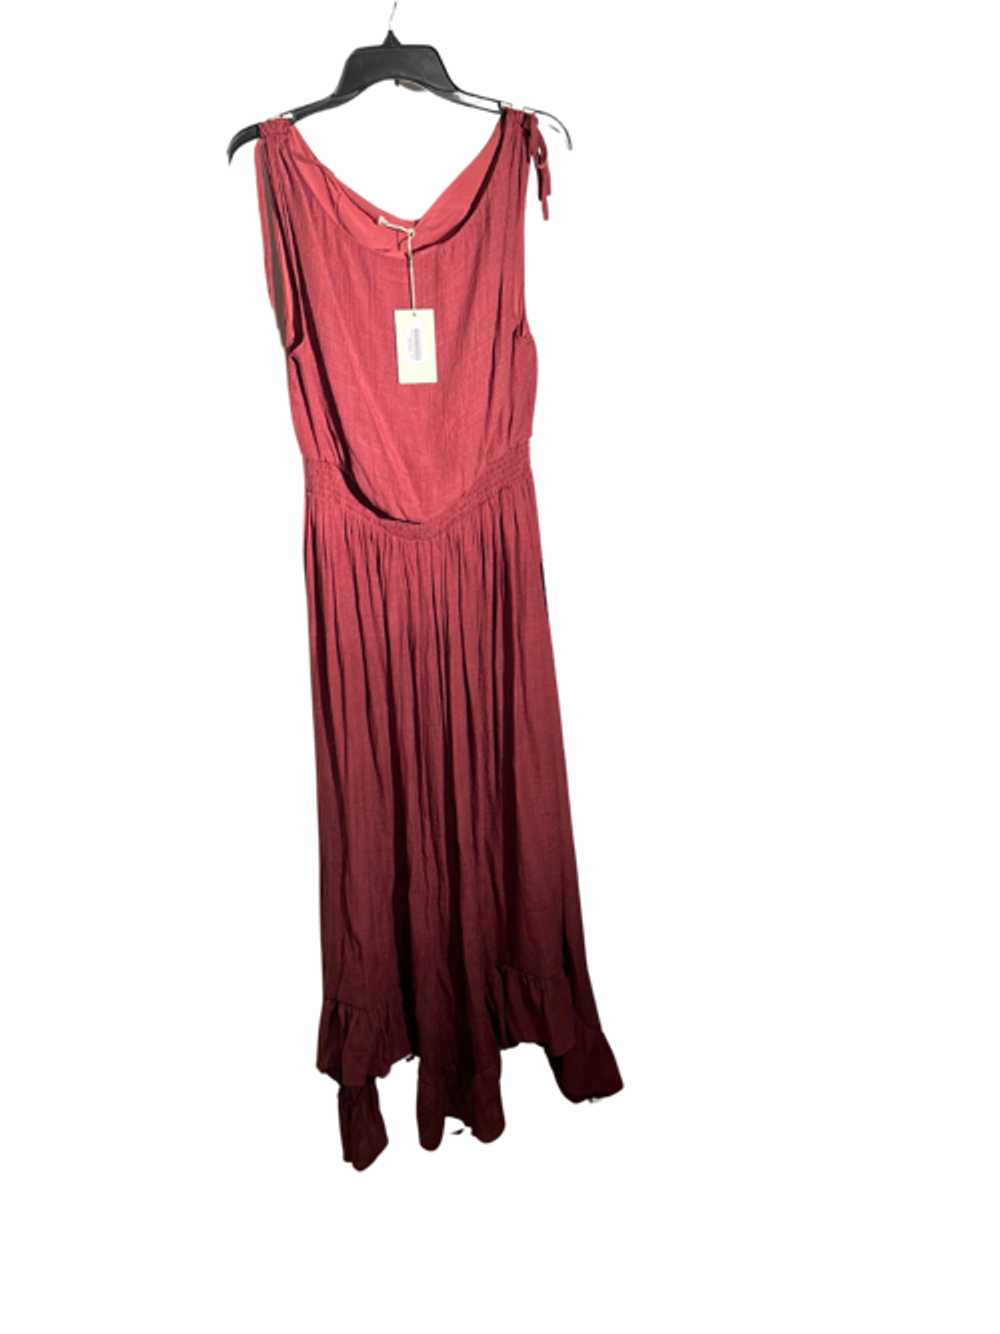 Joyfolie Gia Dress in Mesa Rose - image 4